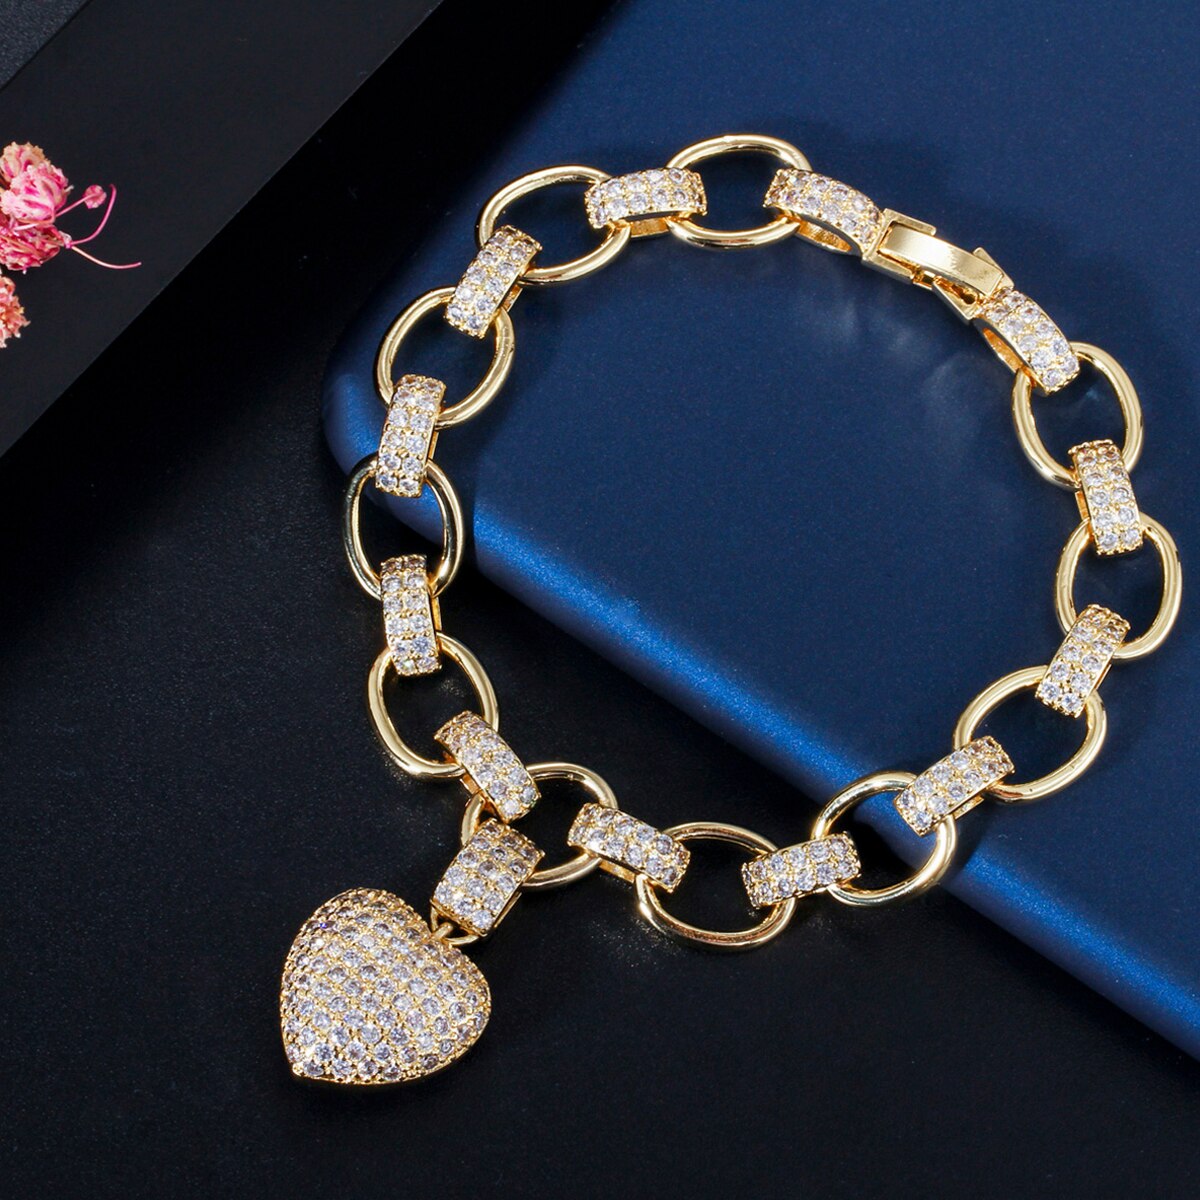 ThreeGraces-Luxury-Cubic-Zirconia-Stone-Yellow-Gold-Color-Love-Heart-Pendant-Necklace-Bracelet-Set-f-1005003297996366-6